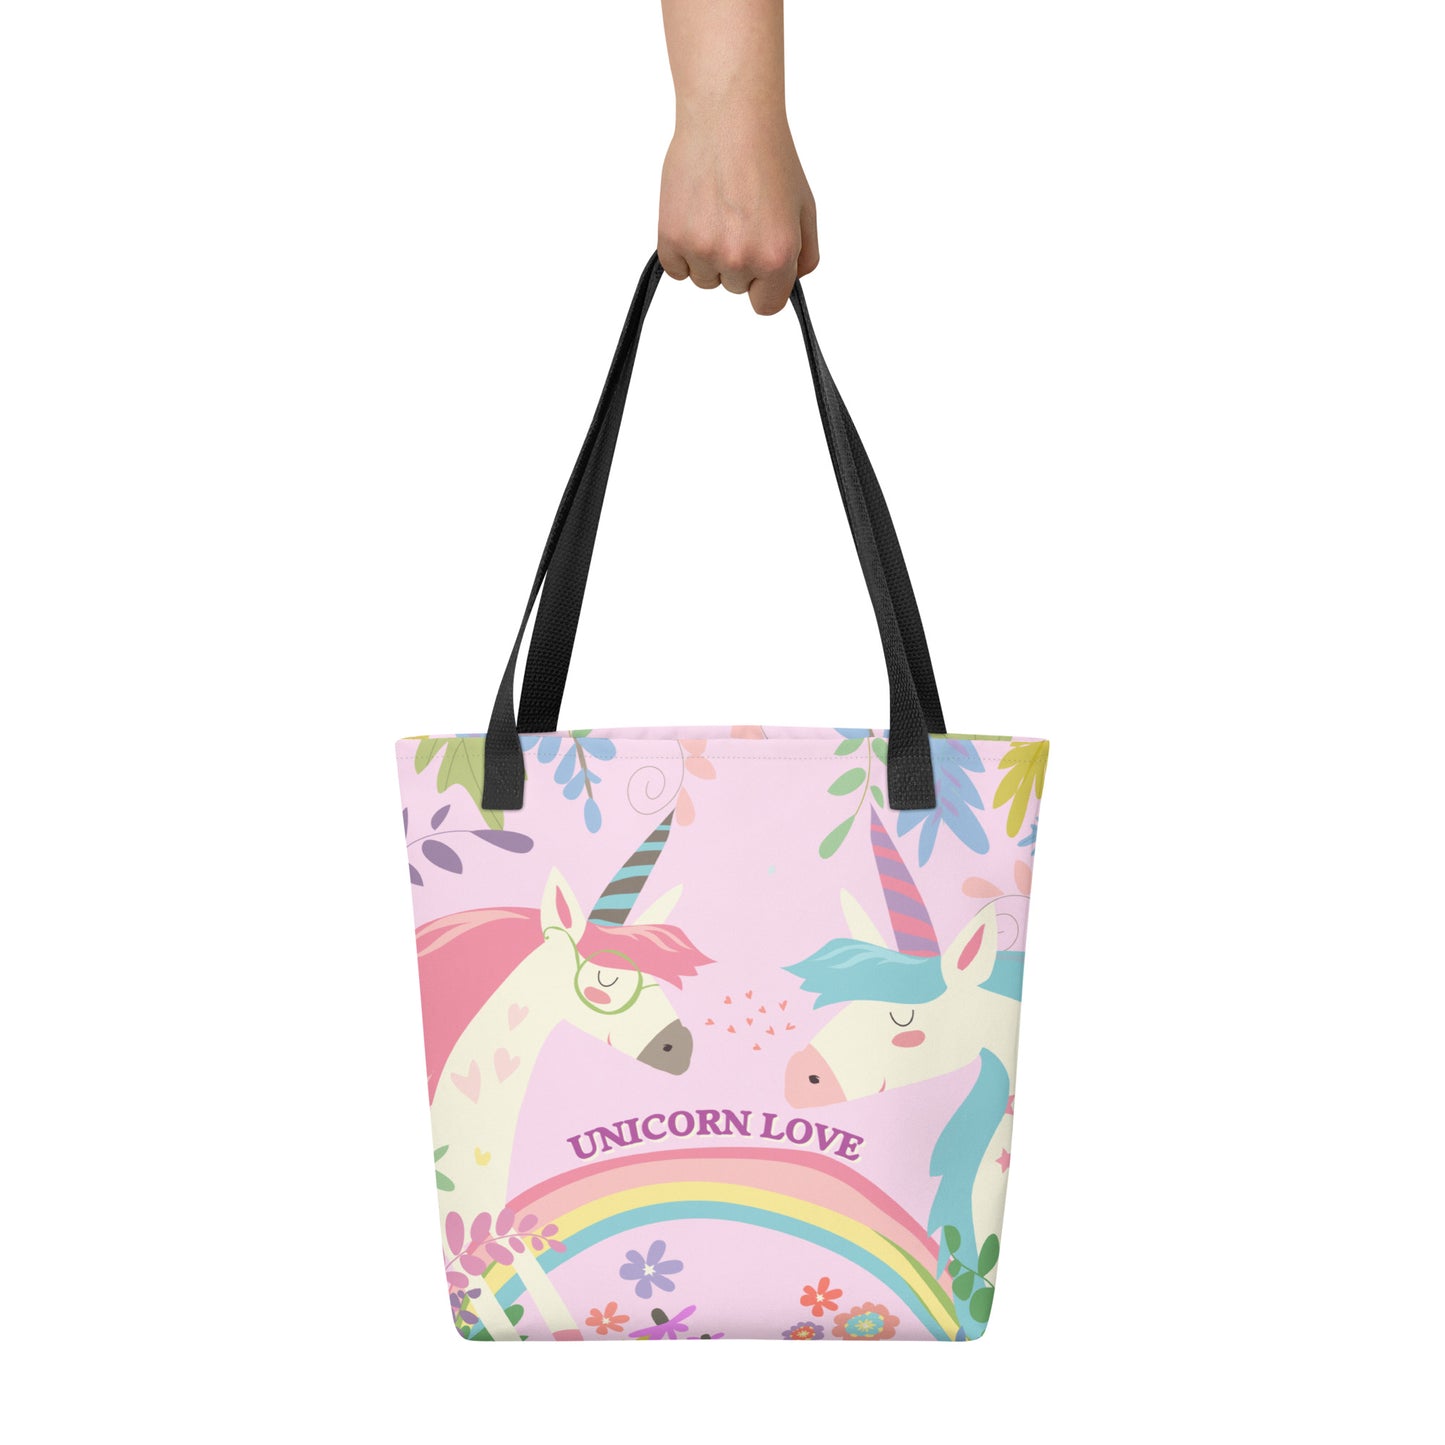 Unicorn Love Tote bag